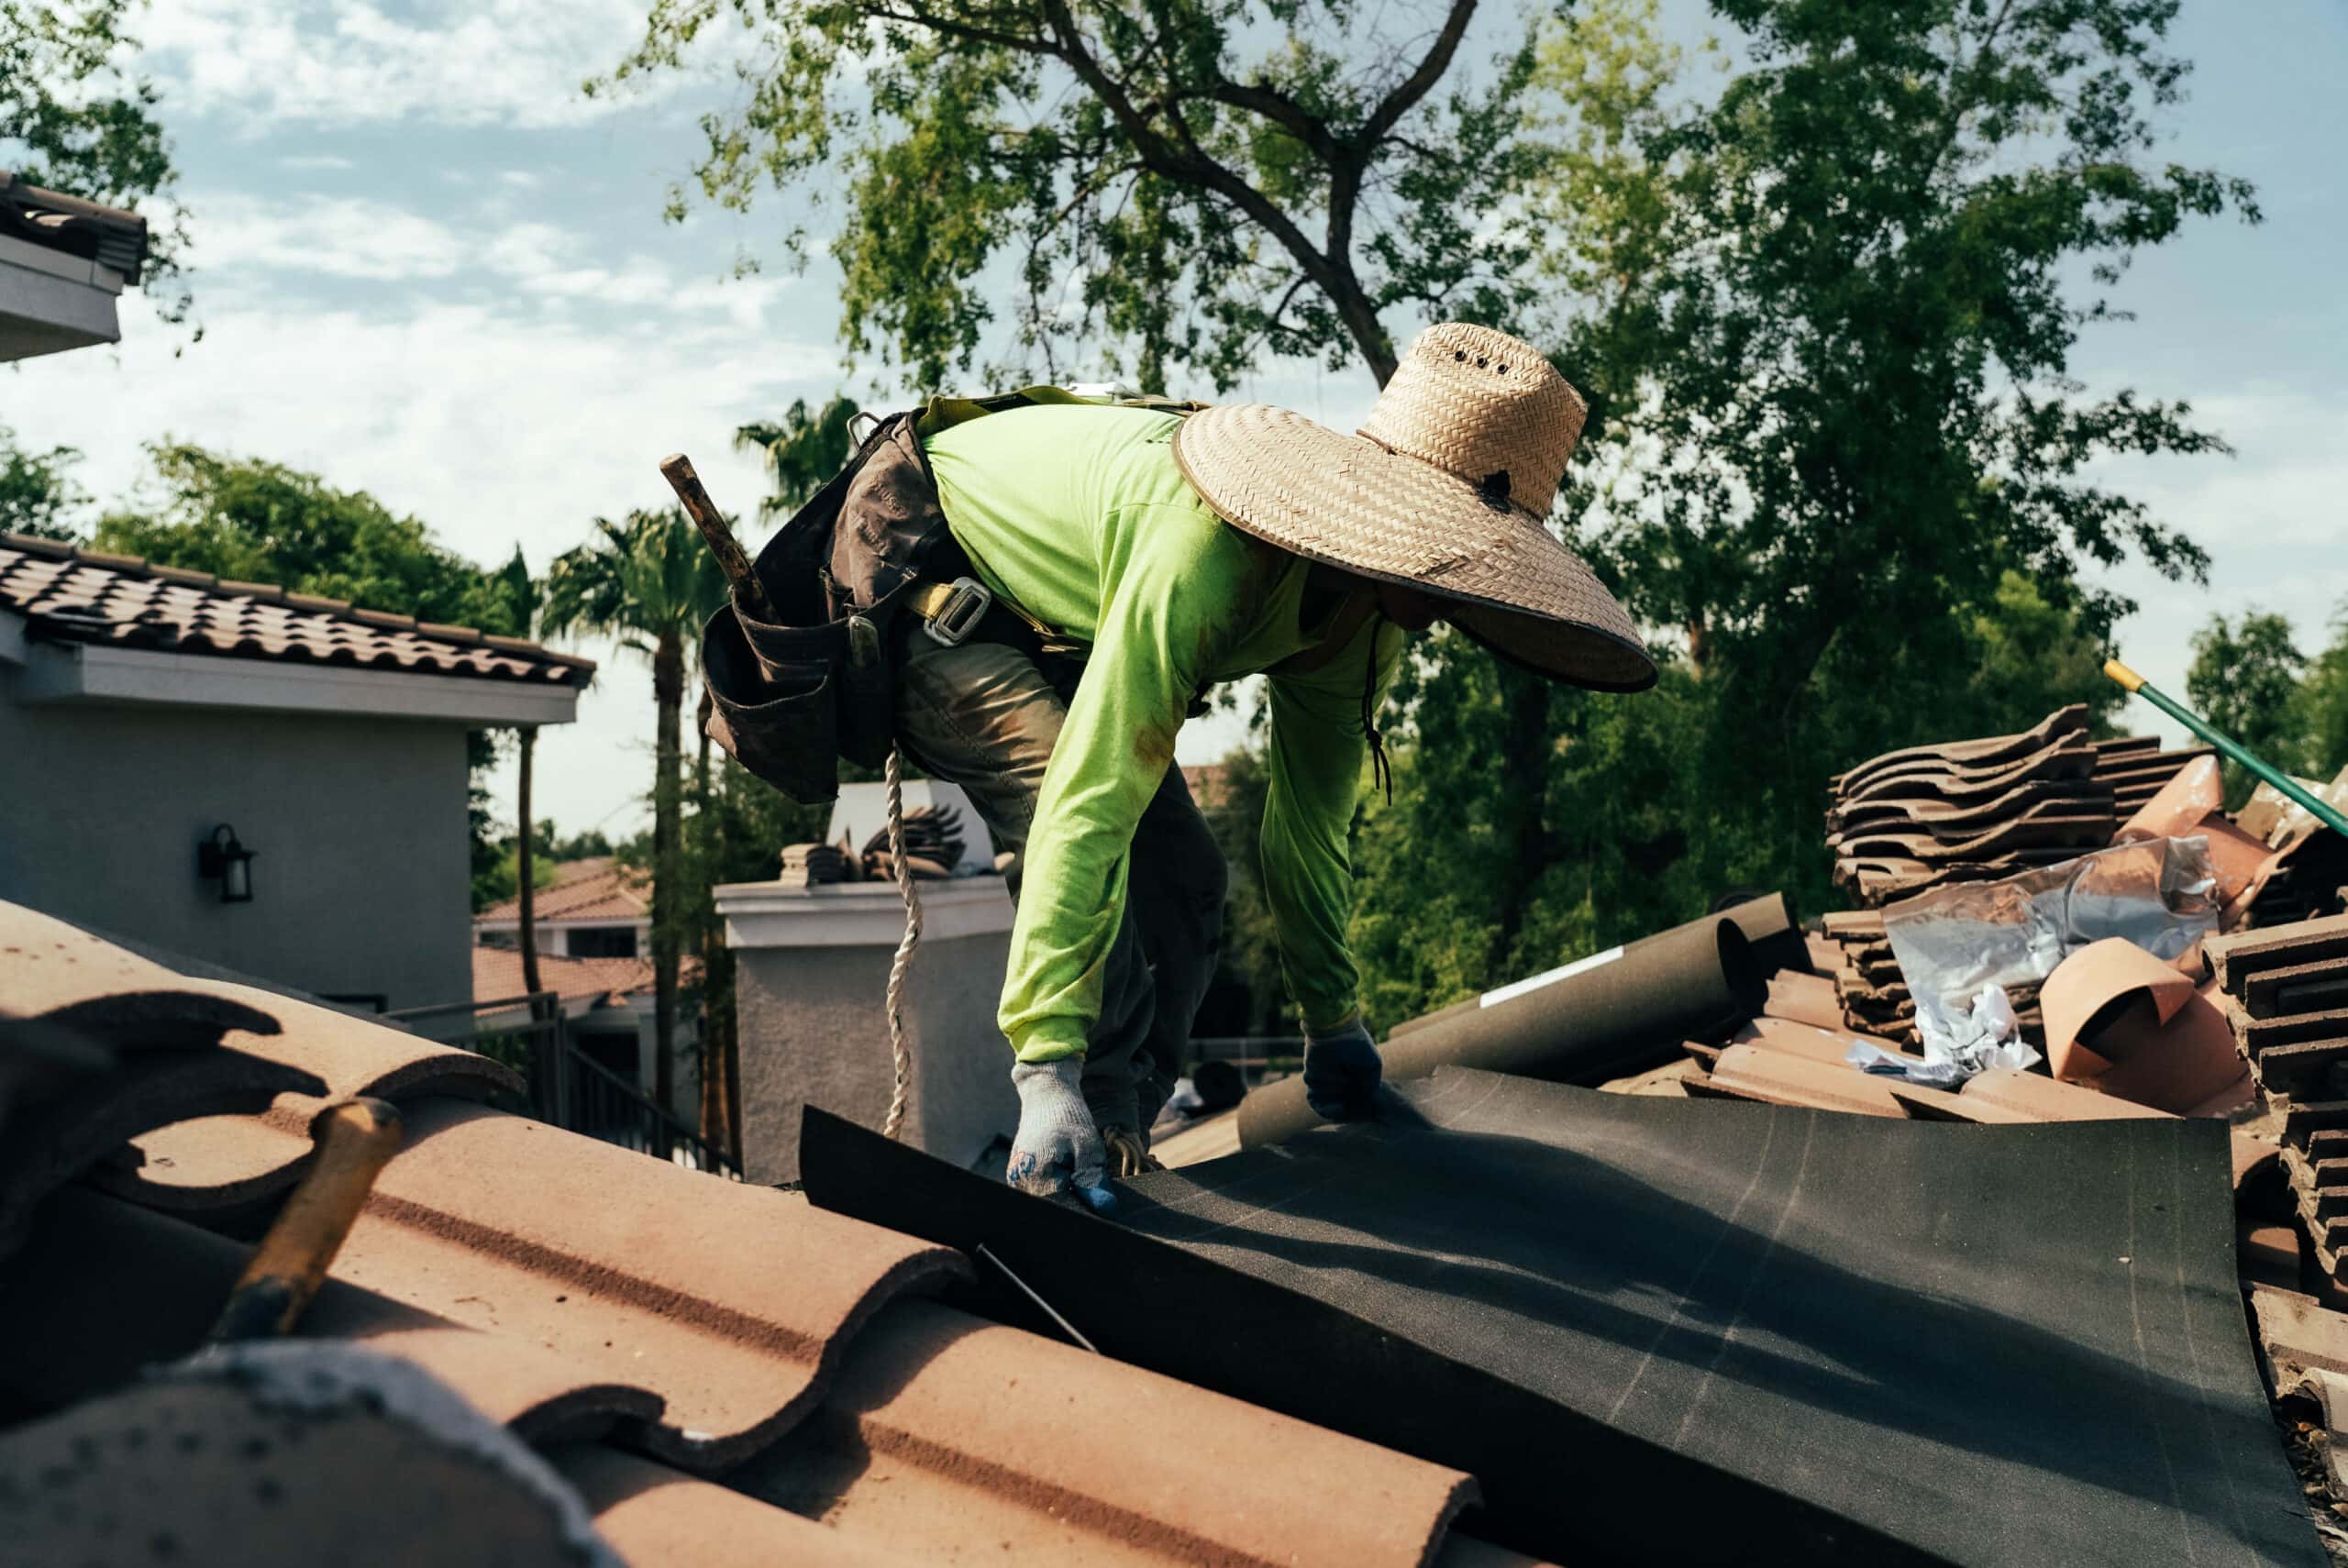 Professional roofer from Behmer demonstrating exceptional tile re-felt craftsmanship in Troon North, Scottsdale.